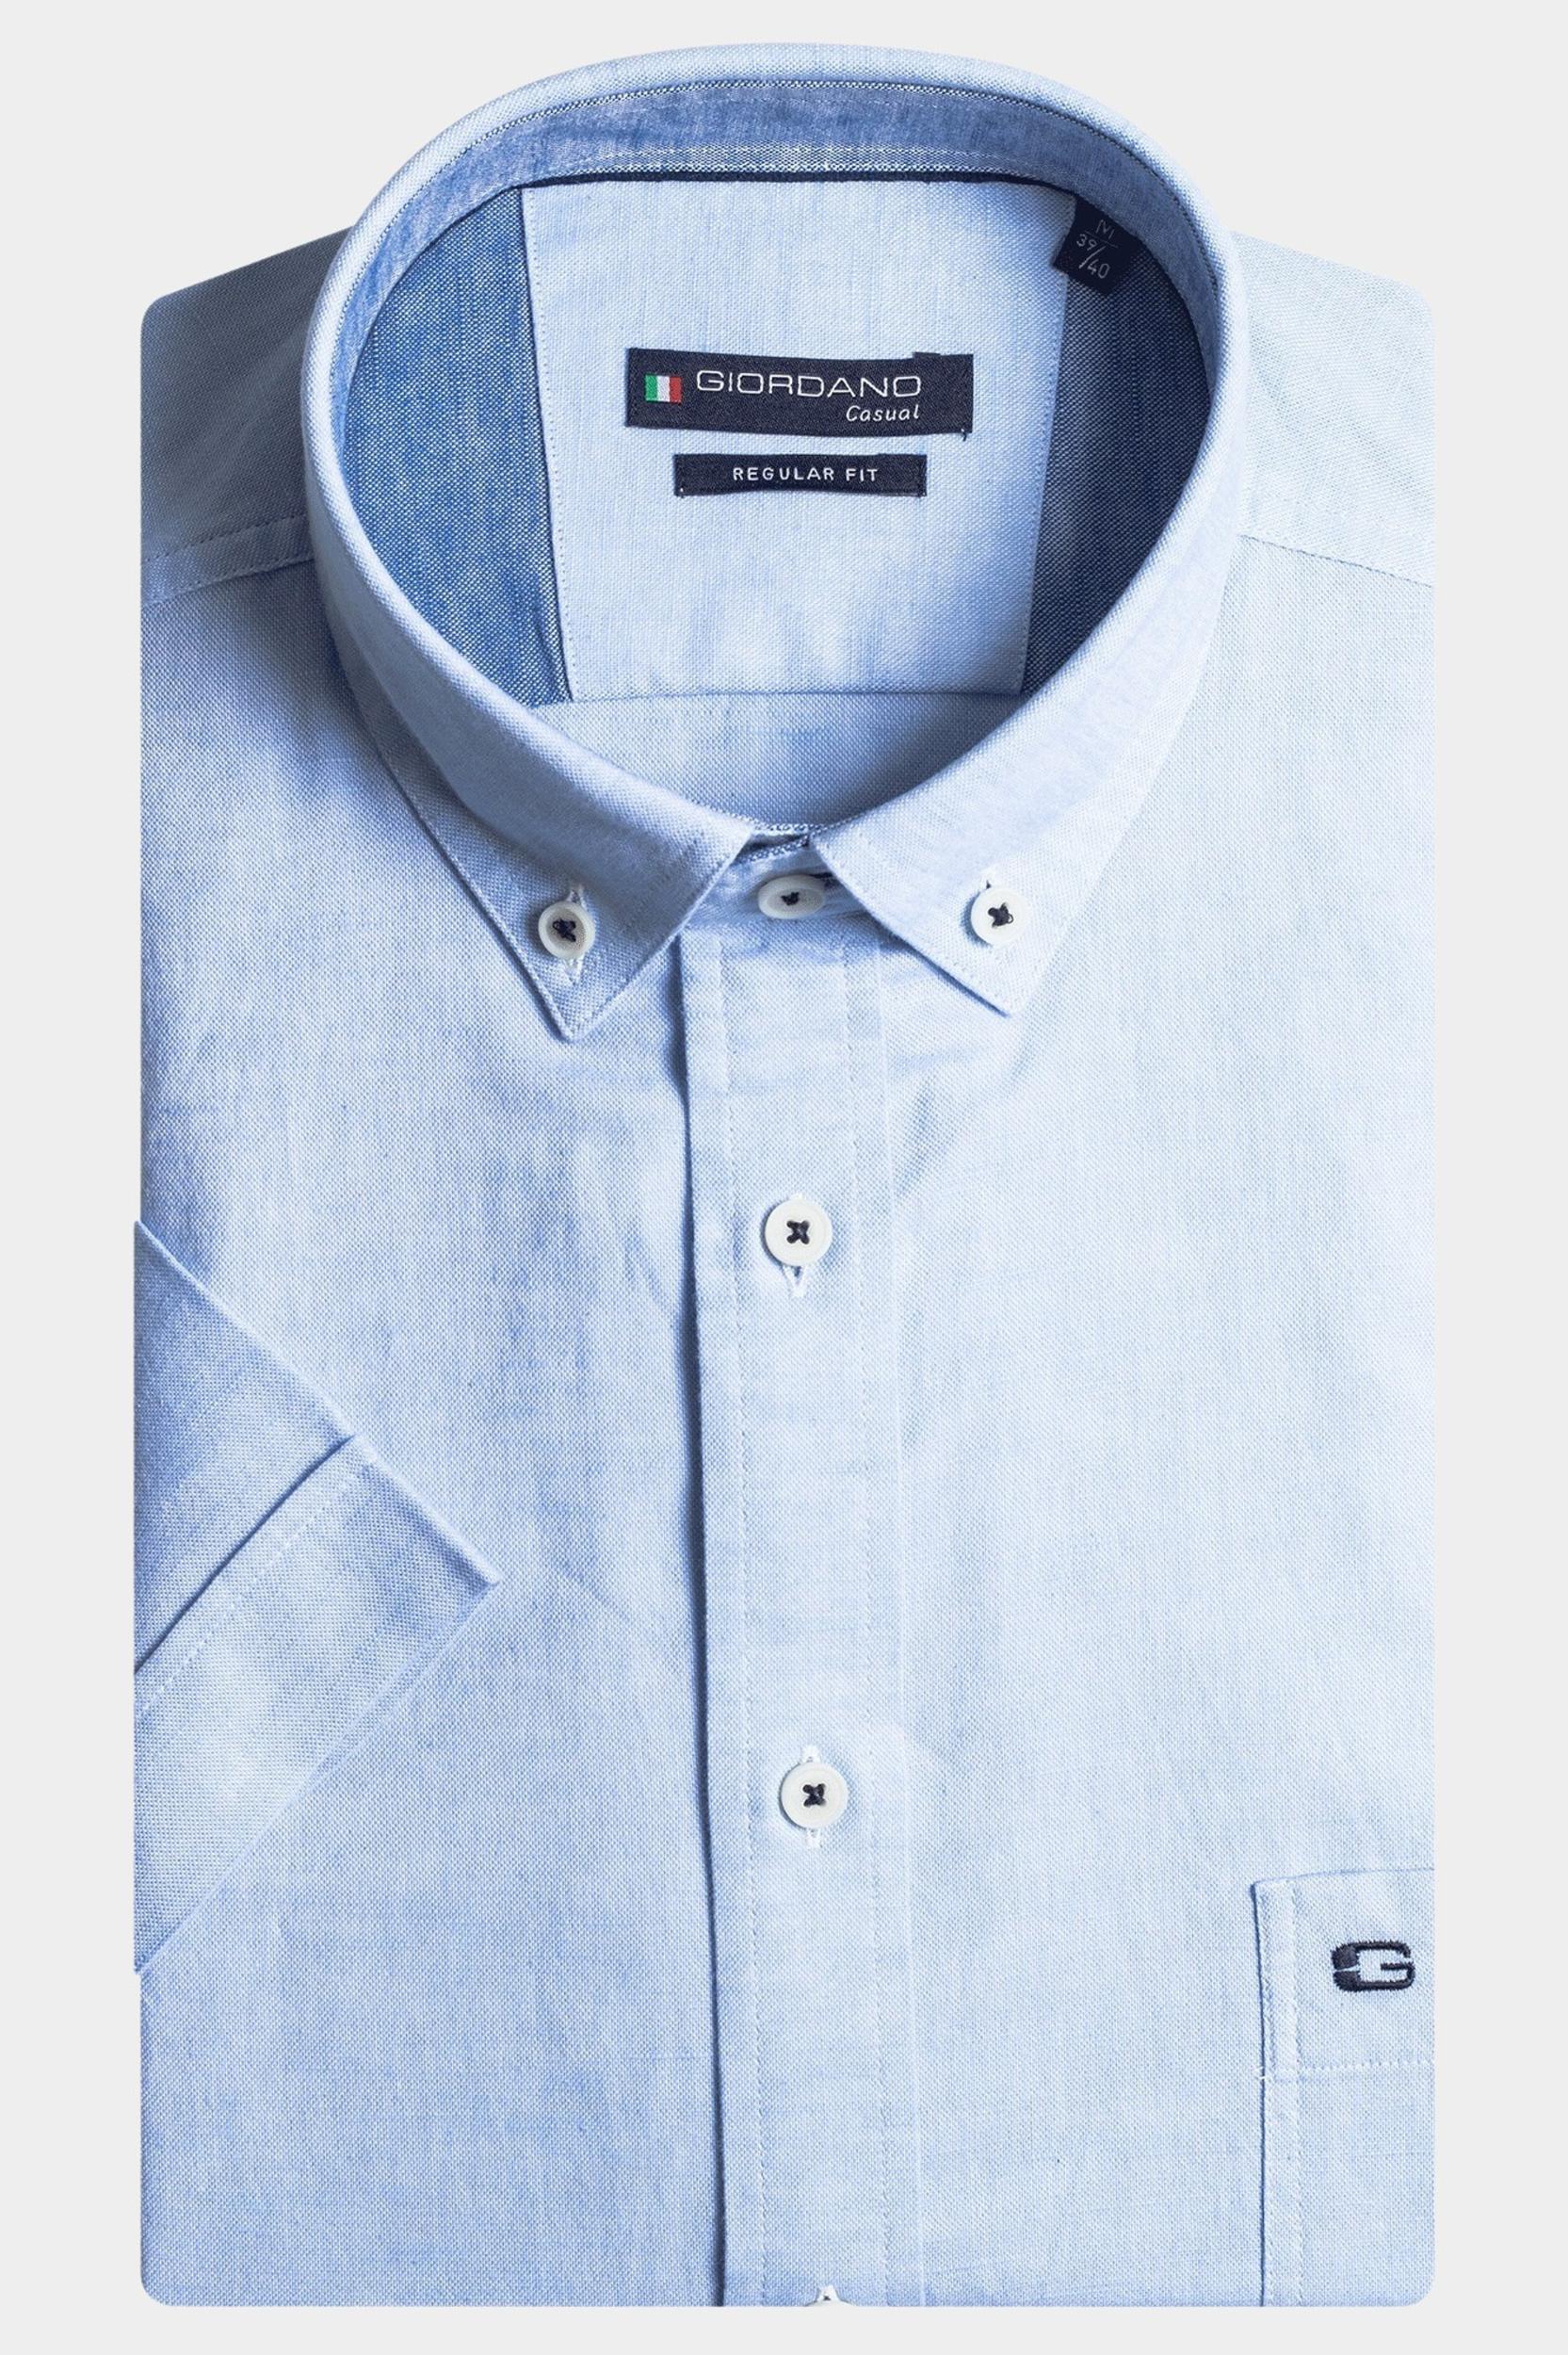 Giordano Casual hemd korte mouw Blauw League Solid Hemp Yarn Fabric 416001/62